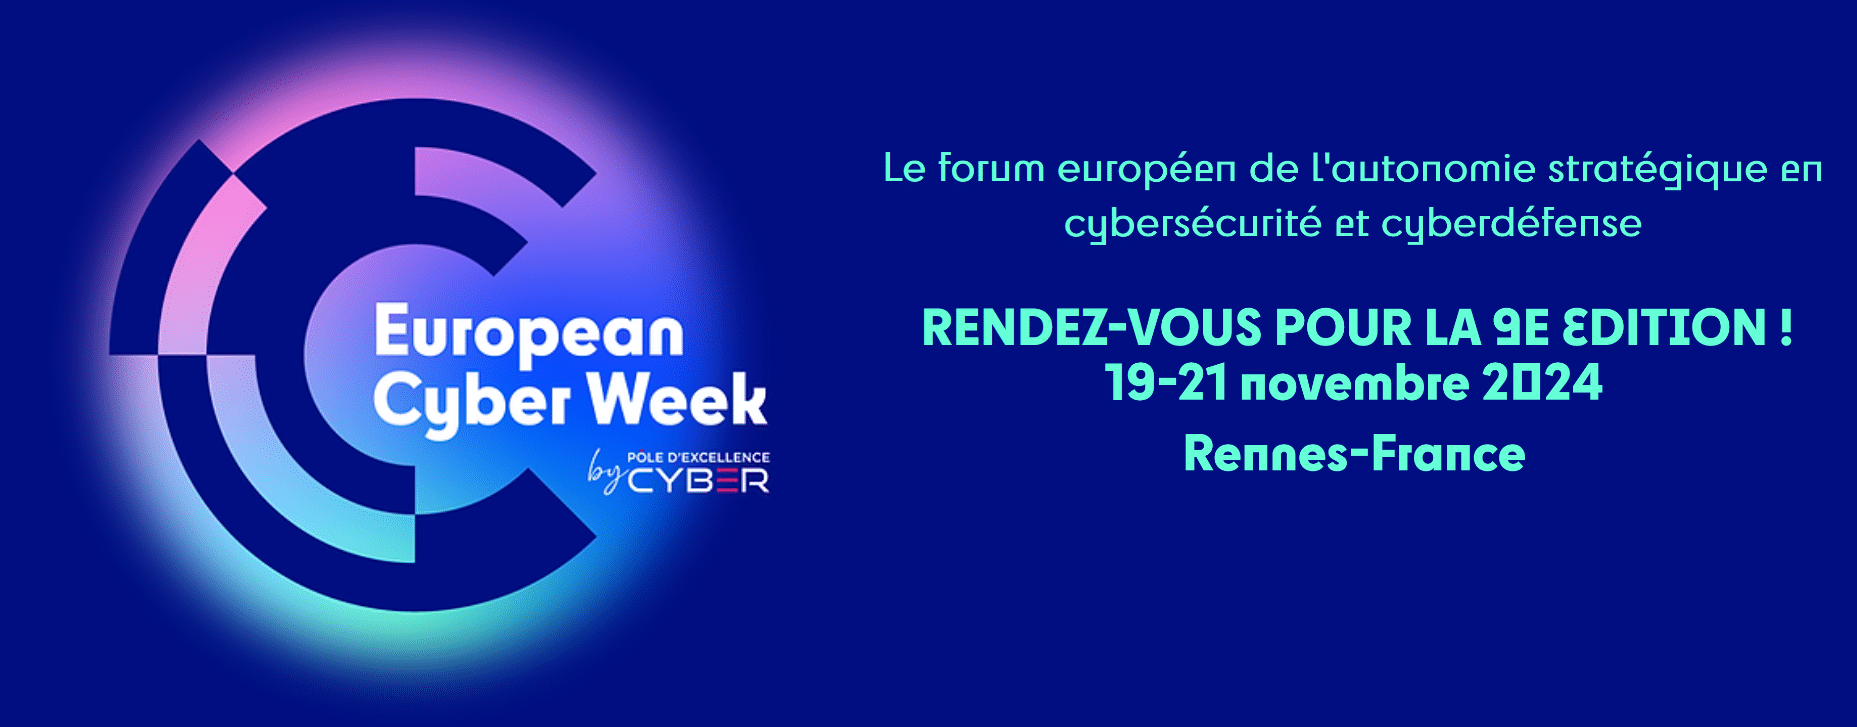 European cyber week 19 au 21 novembre 2024 à Rennes